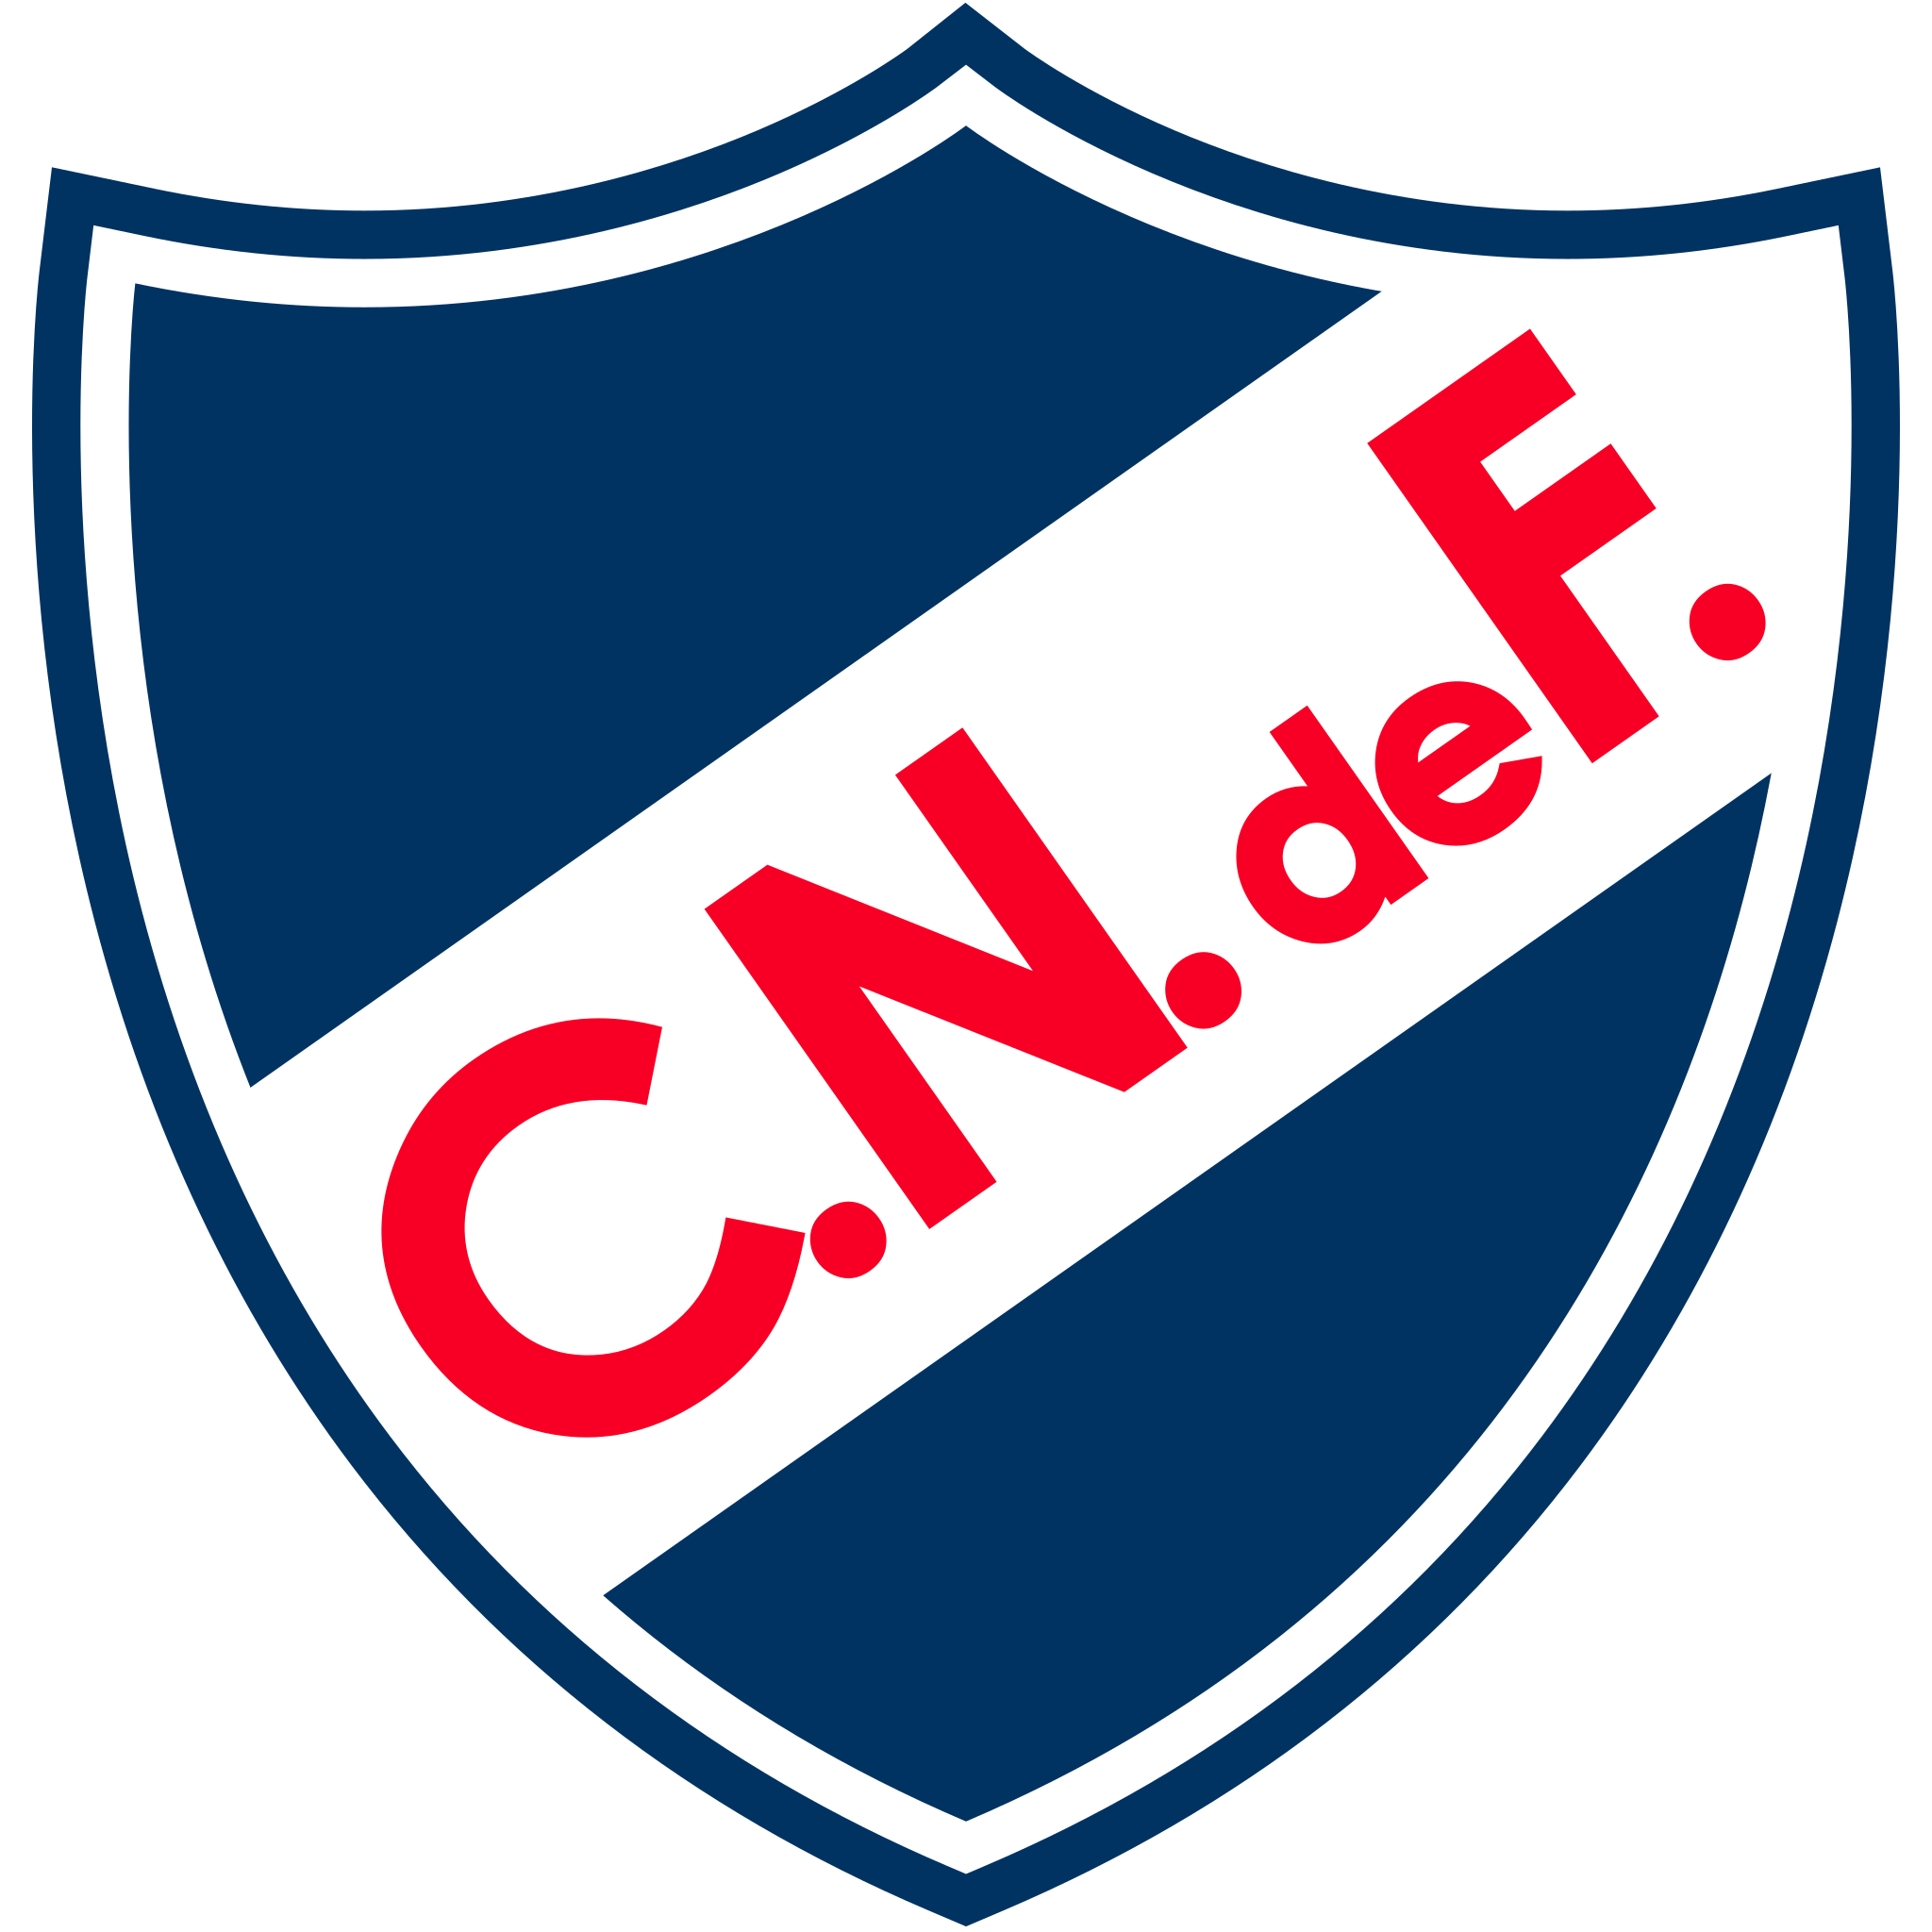 Archivo:Escudo del Club Nacional de Football.svg - Wikipedia, la enciclopedia libre